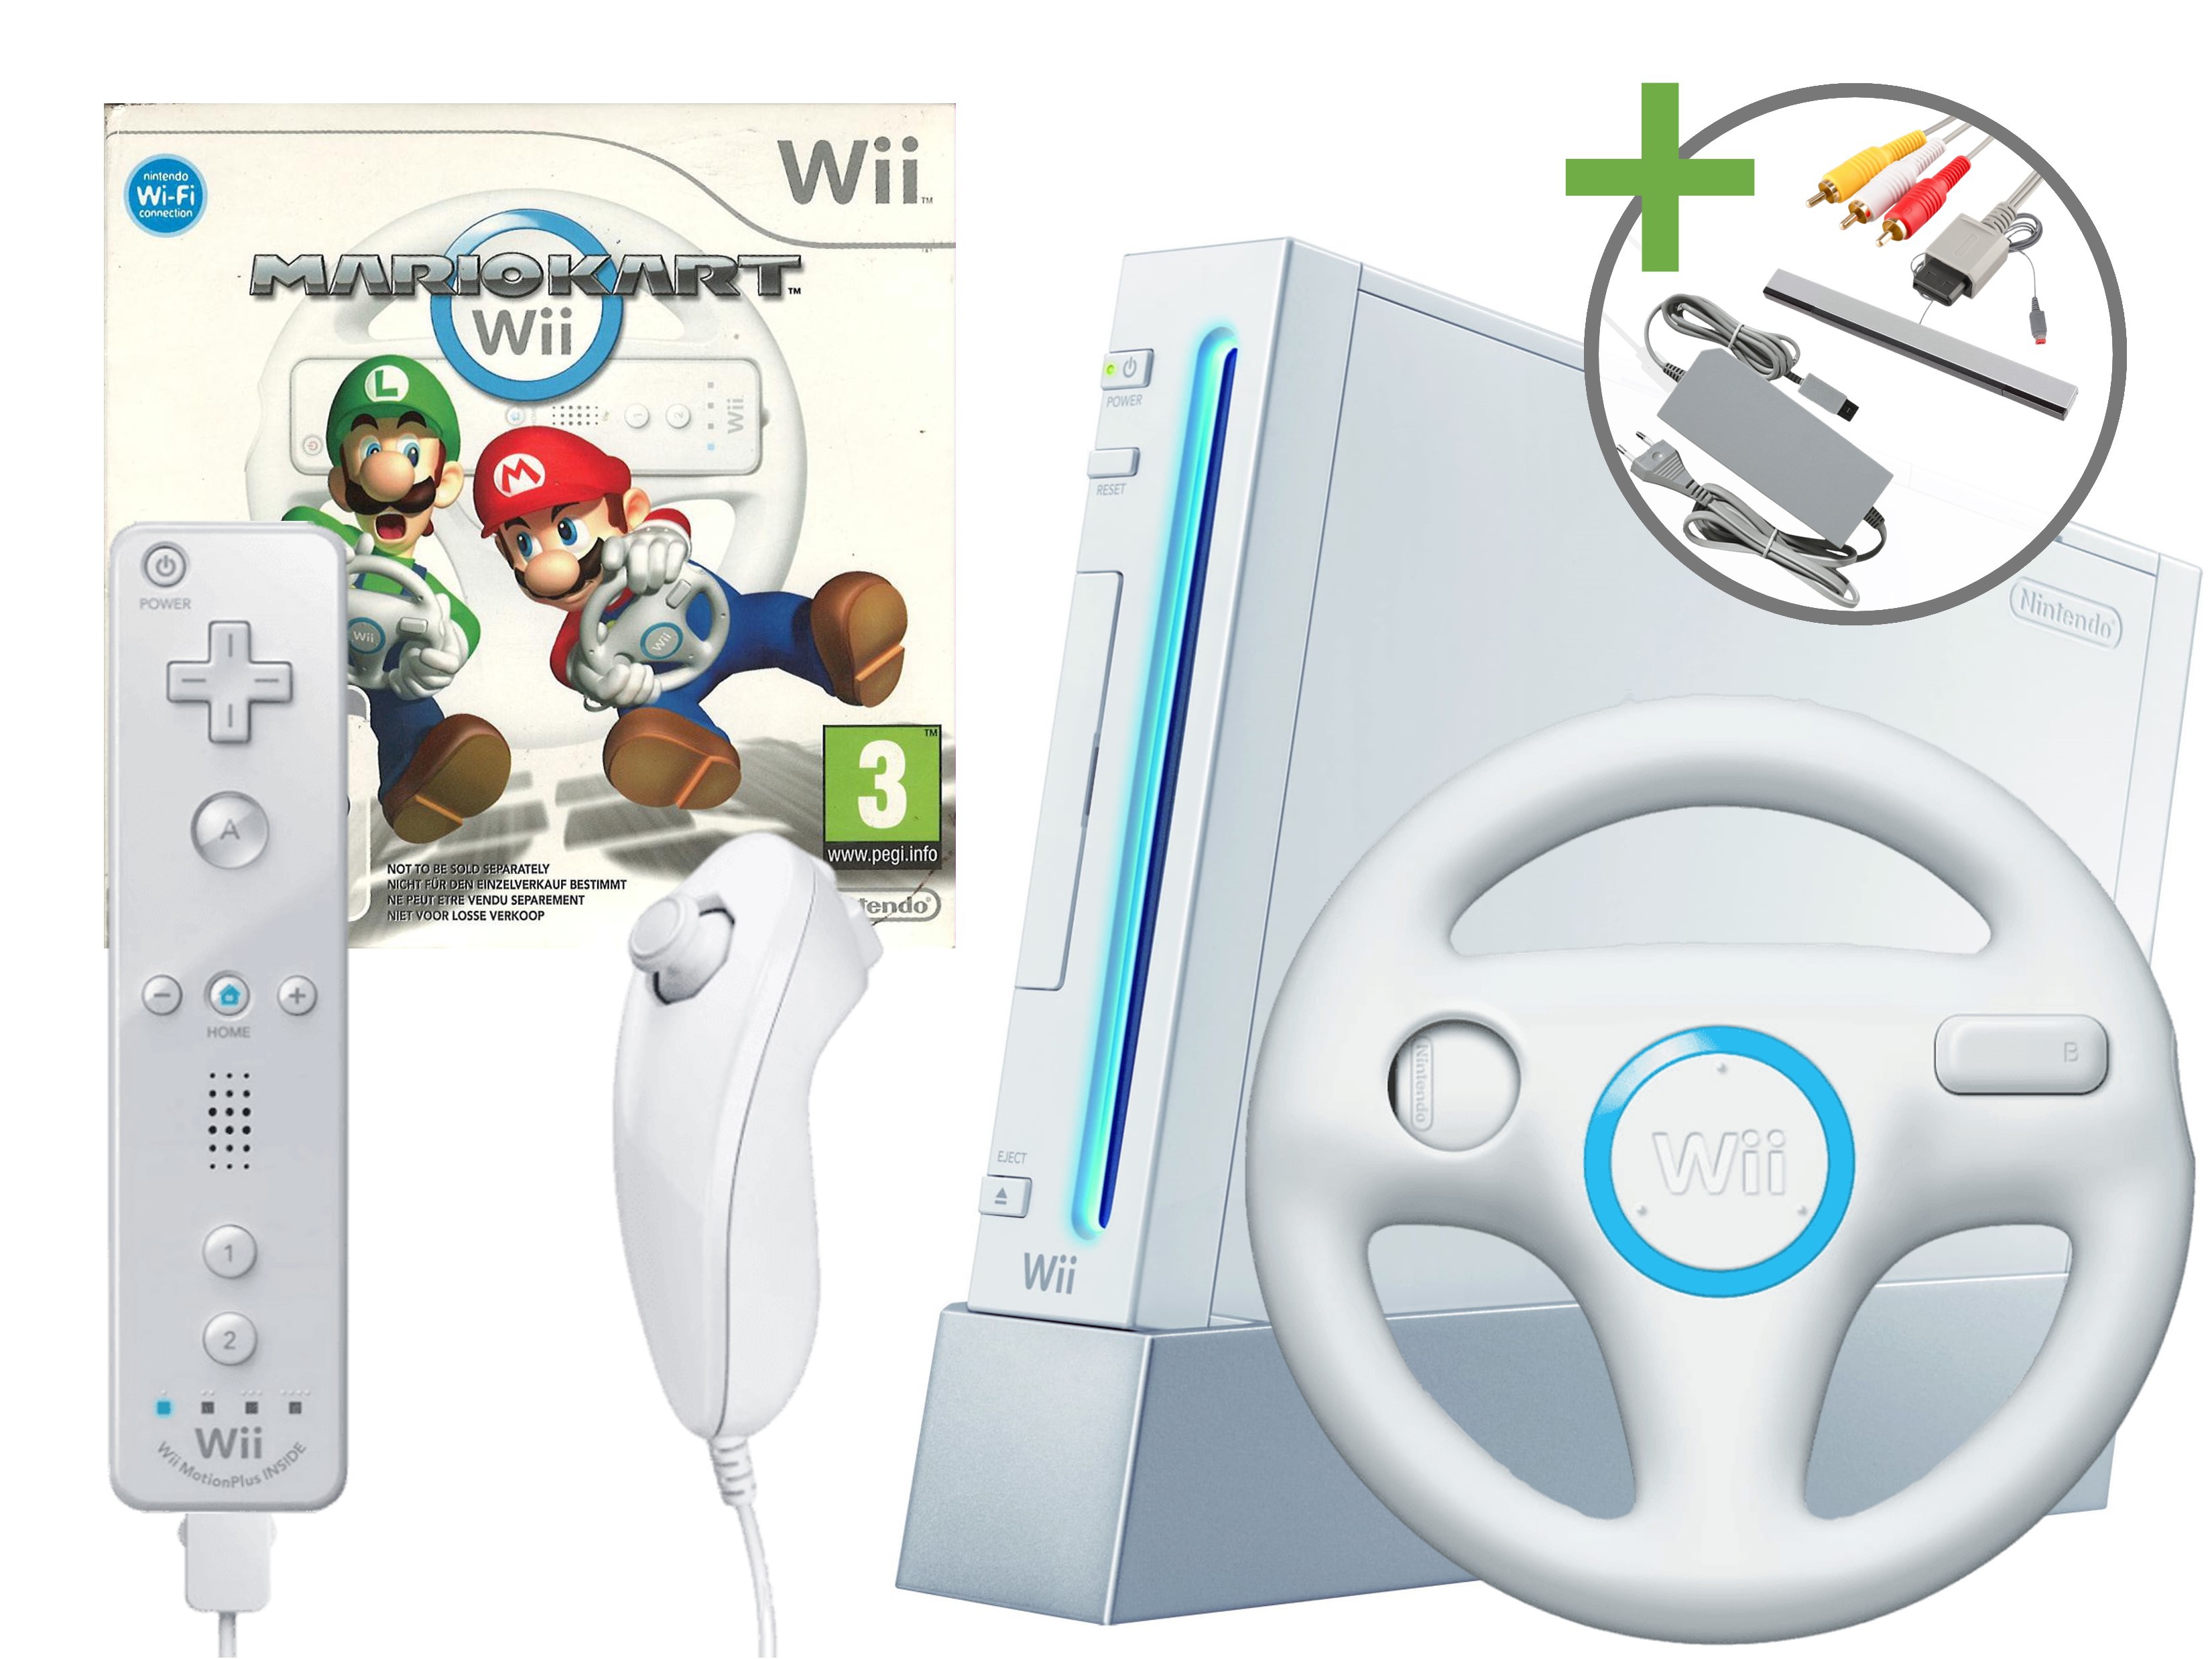 Nintendo Wii Starter Pack - Mario Kart Motion Plus White Edition [Complete] - Wii Hardware - 2